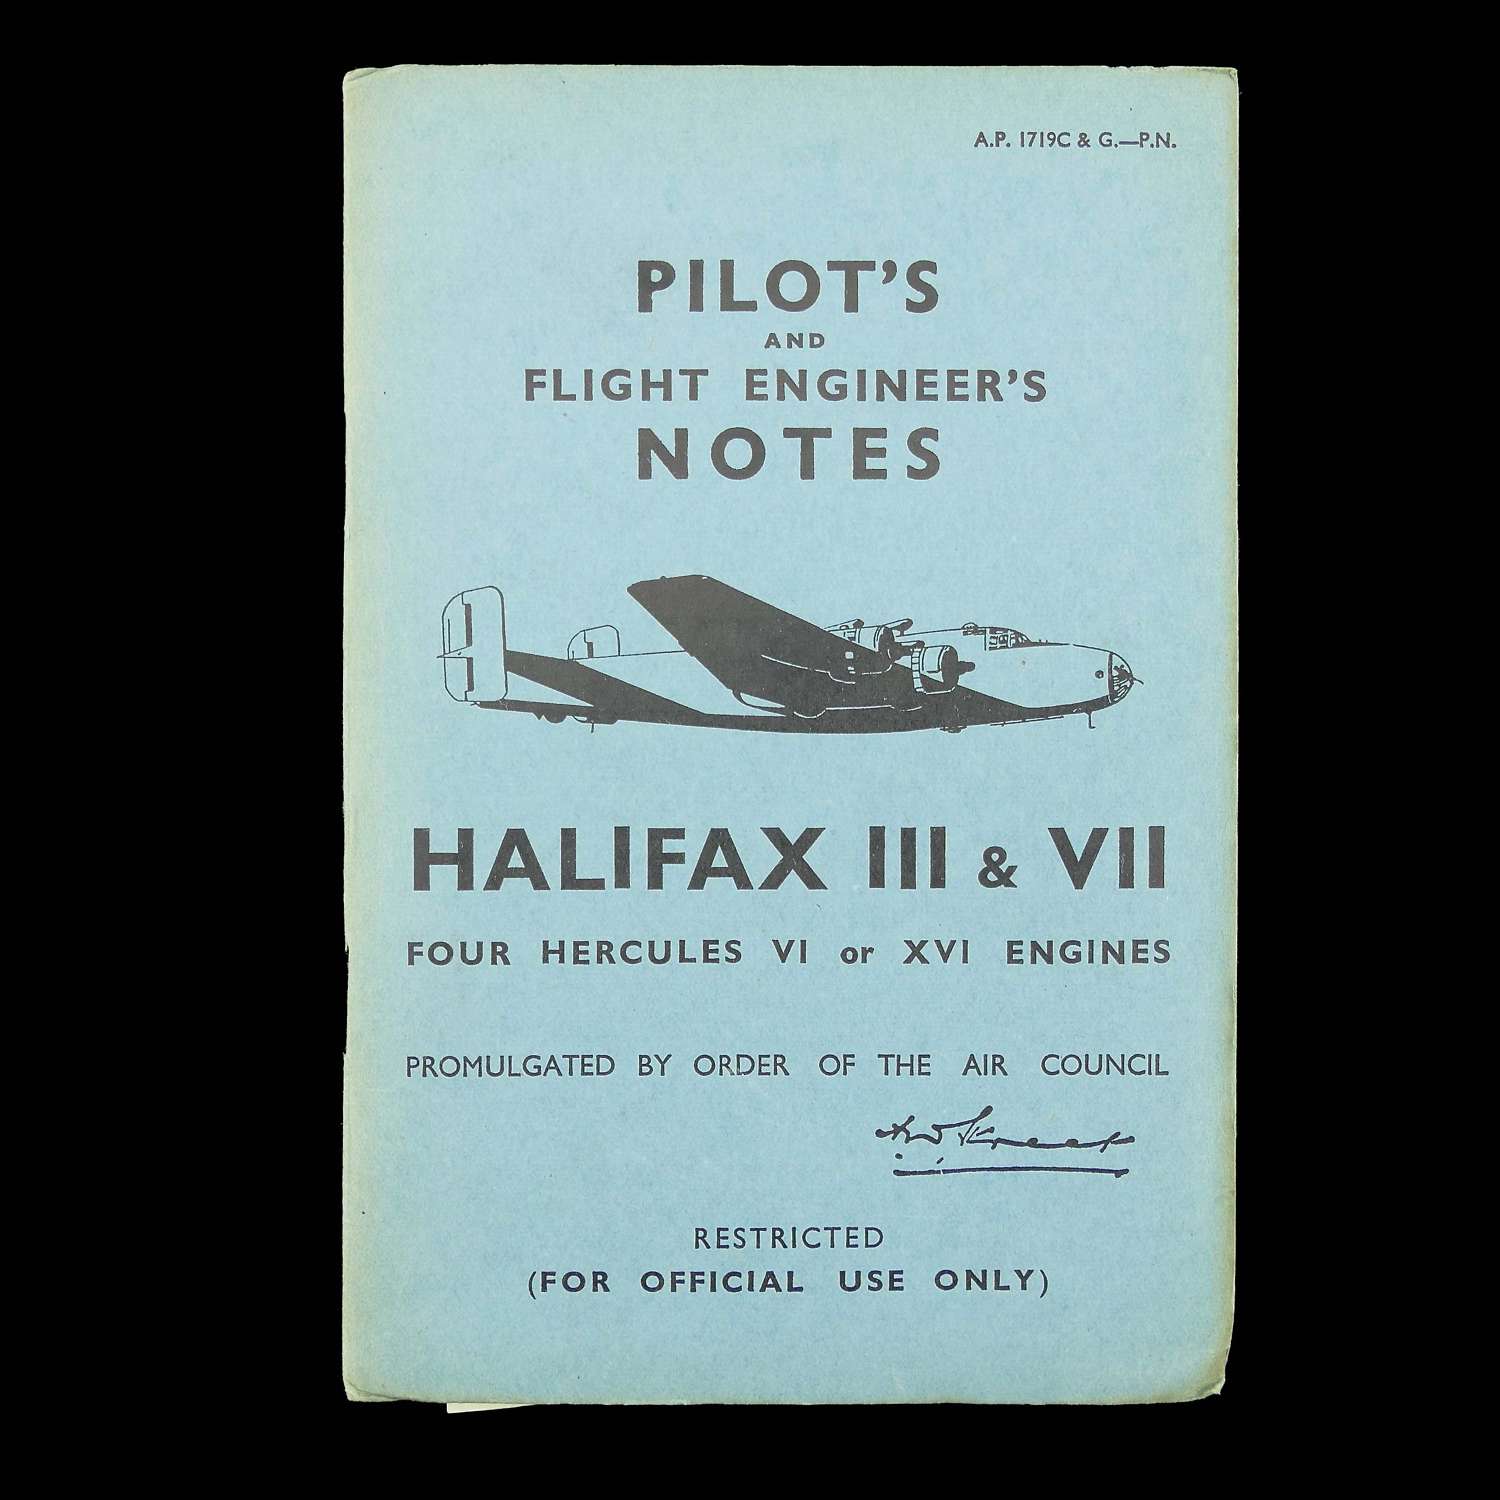 RAF pilot's notes - Halifax III & VII